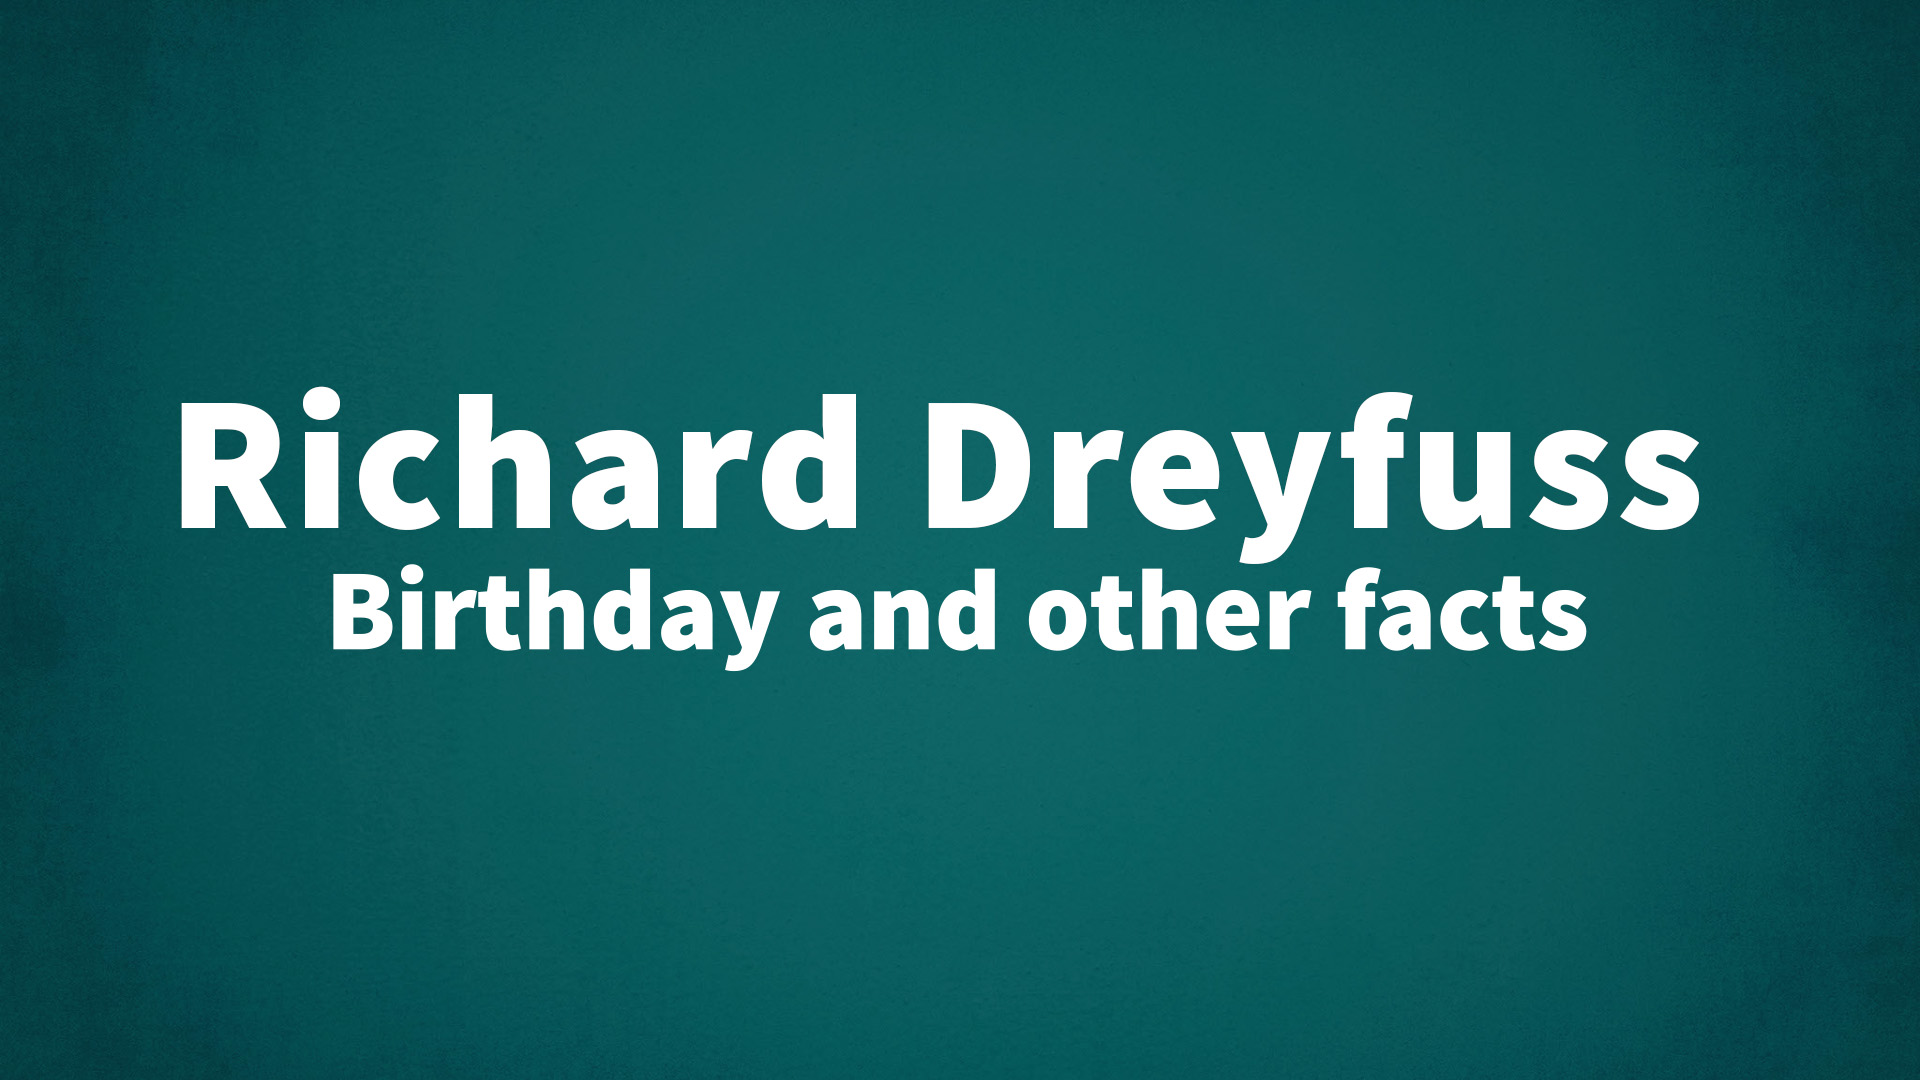 title image for Richard Dreyfuss birthday